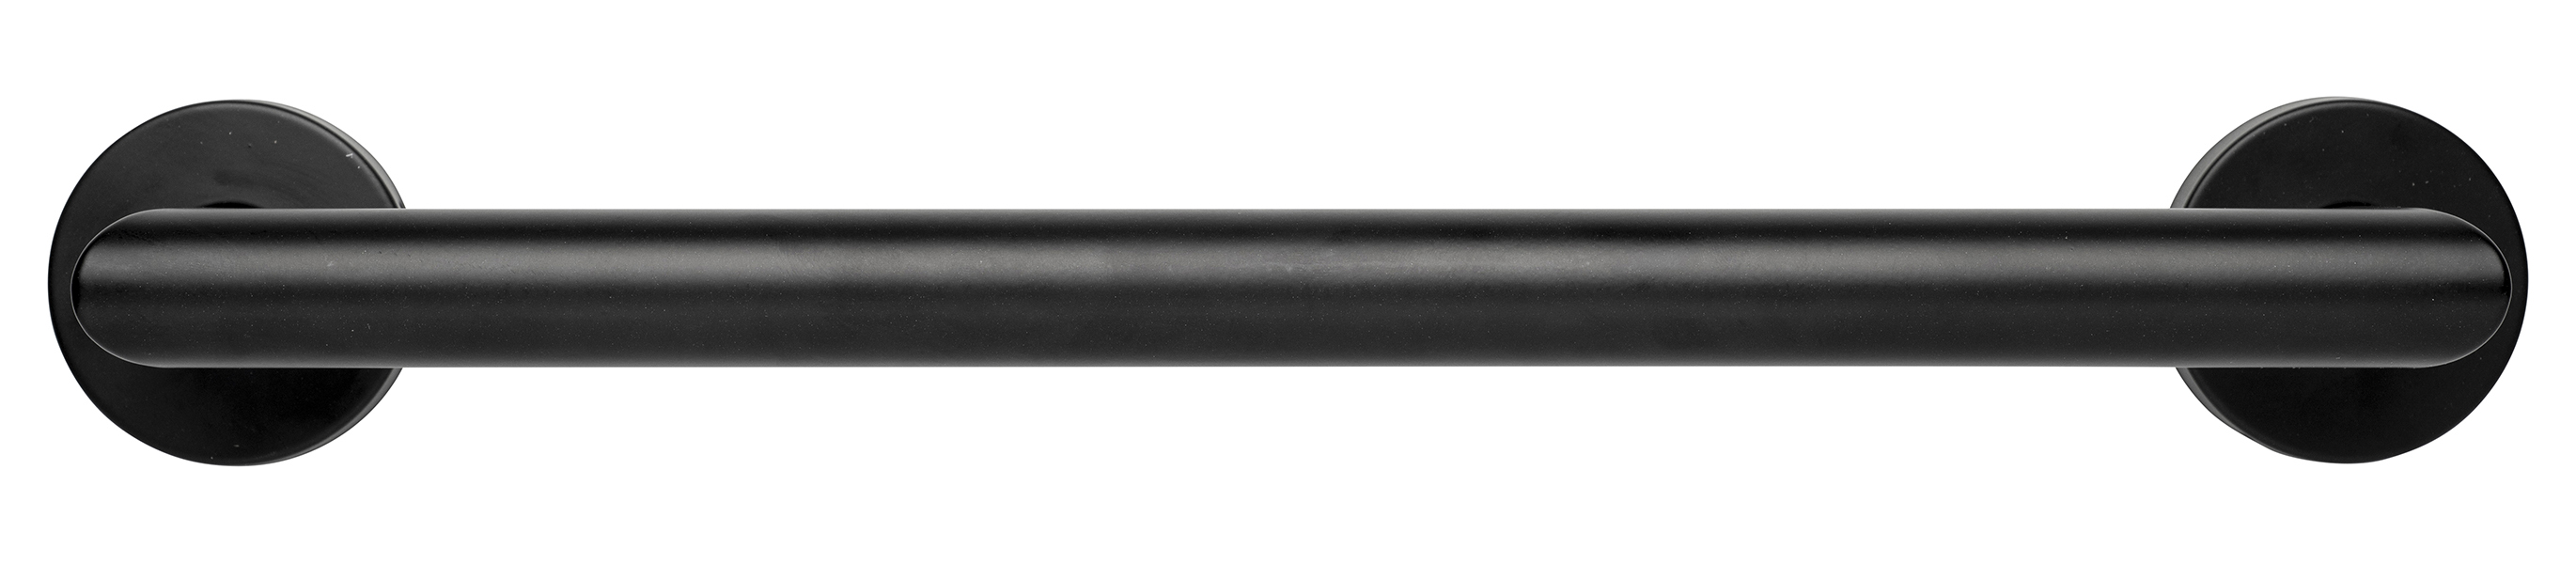 Croydex Straight Black Grab Bar - 300mm